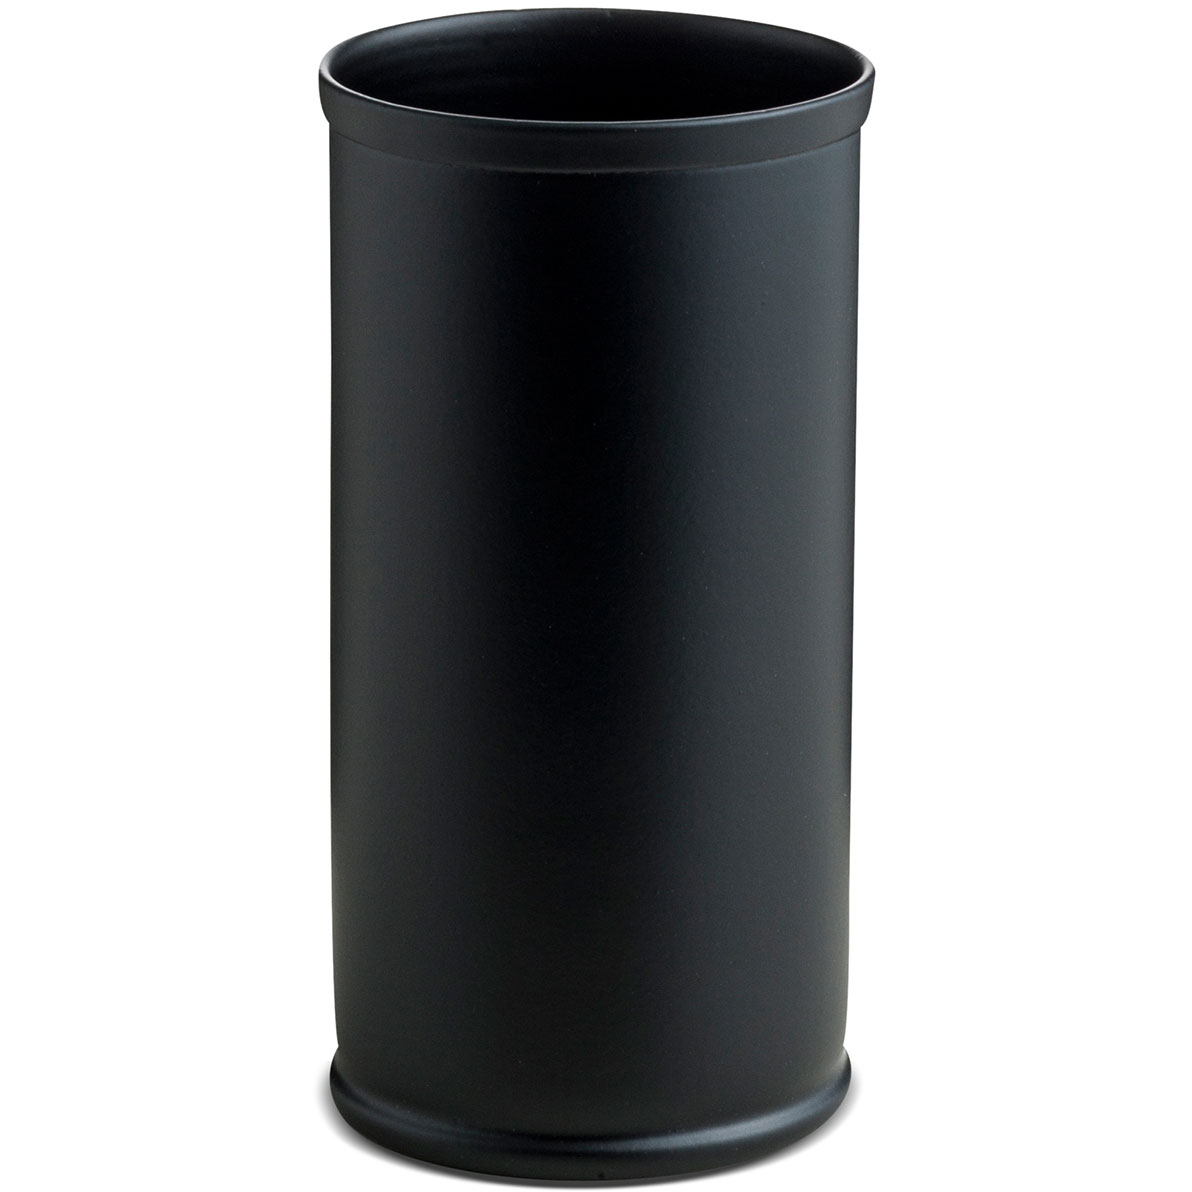 Genuine vase, small black